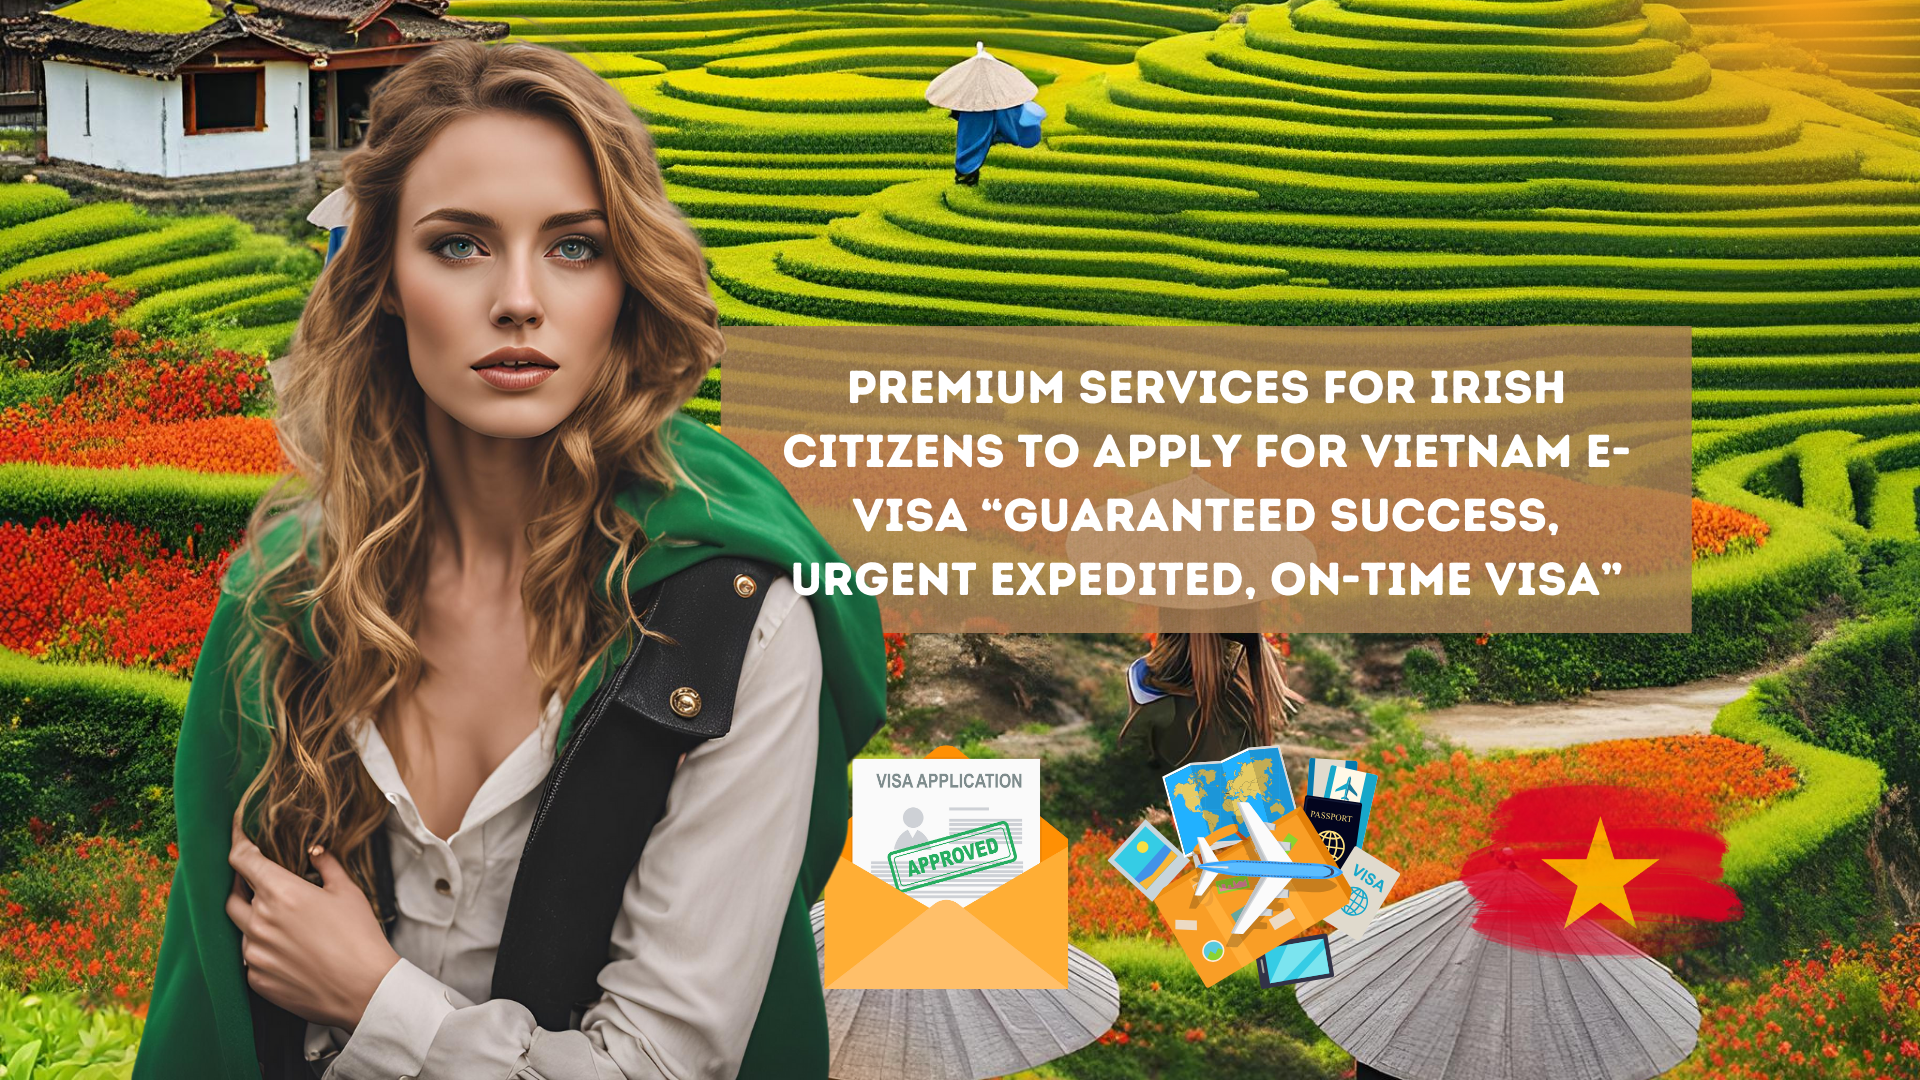 Premium Services for Irish Citizens to apply for Vietnam e-visa “Guaranteed success, urgent expedited, on-time visa”